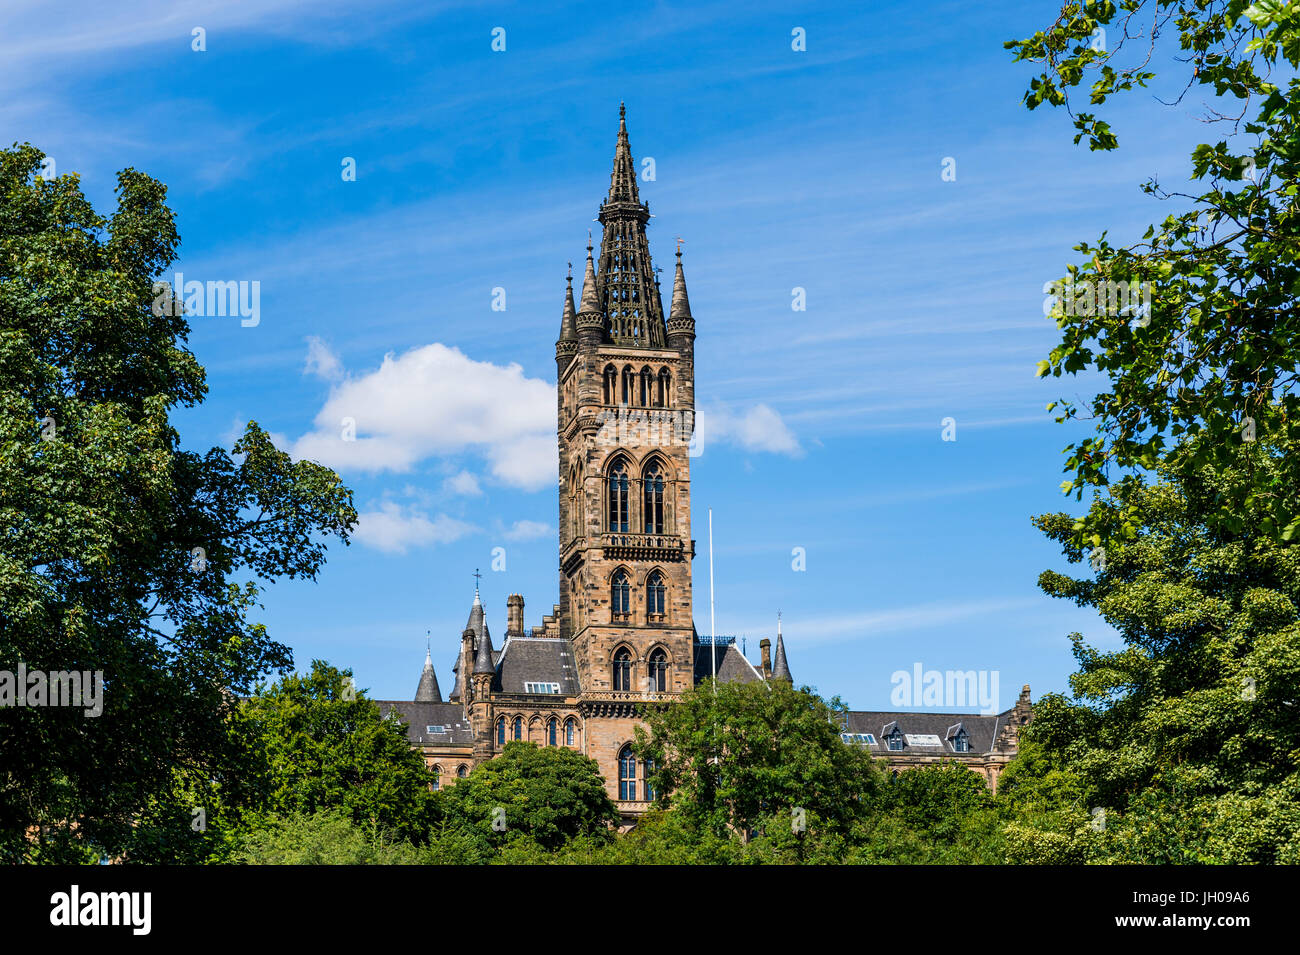 Glasgow, Scotland, UK - August 8, 2012: The gothic tower of Glasgow University. Stock Photo